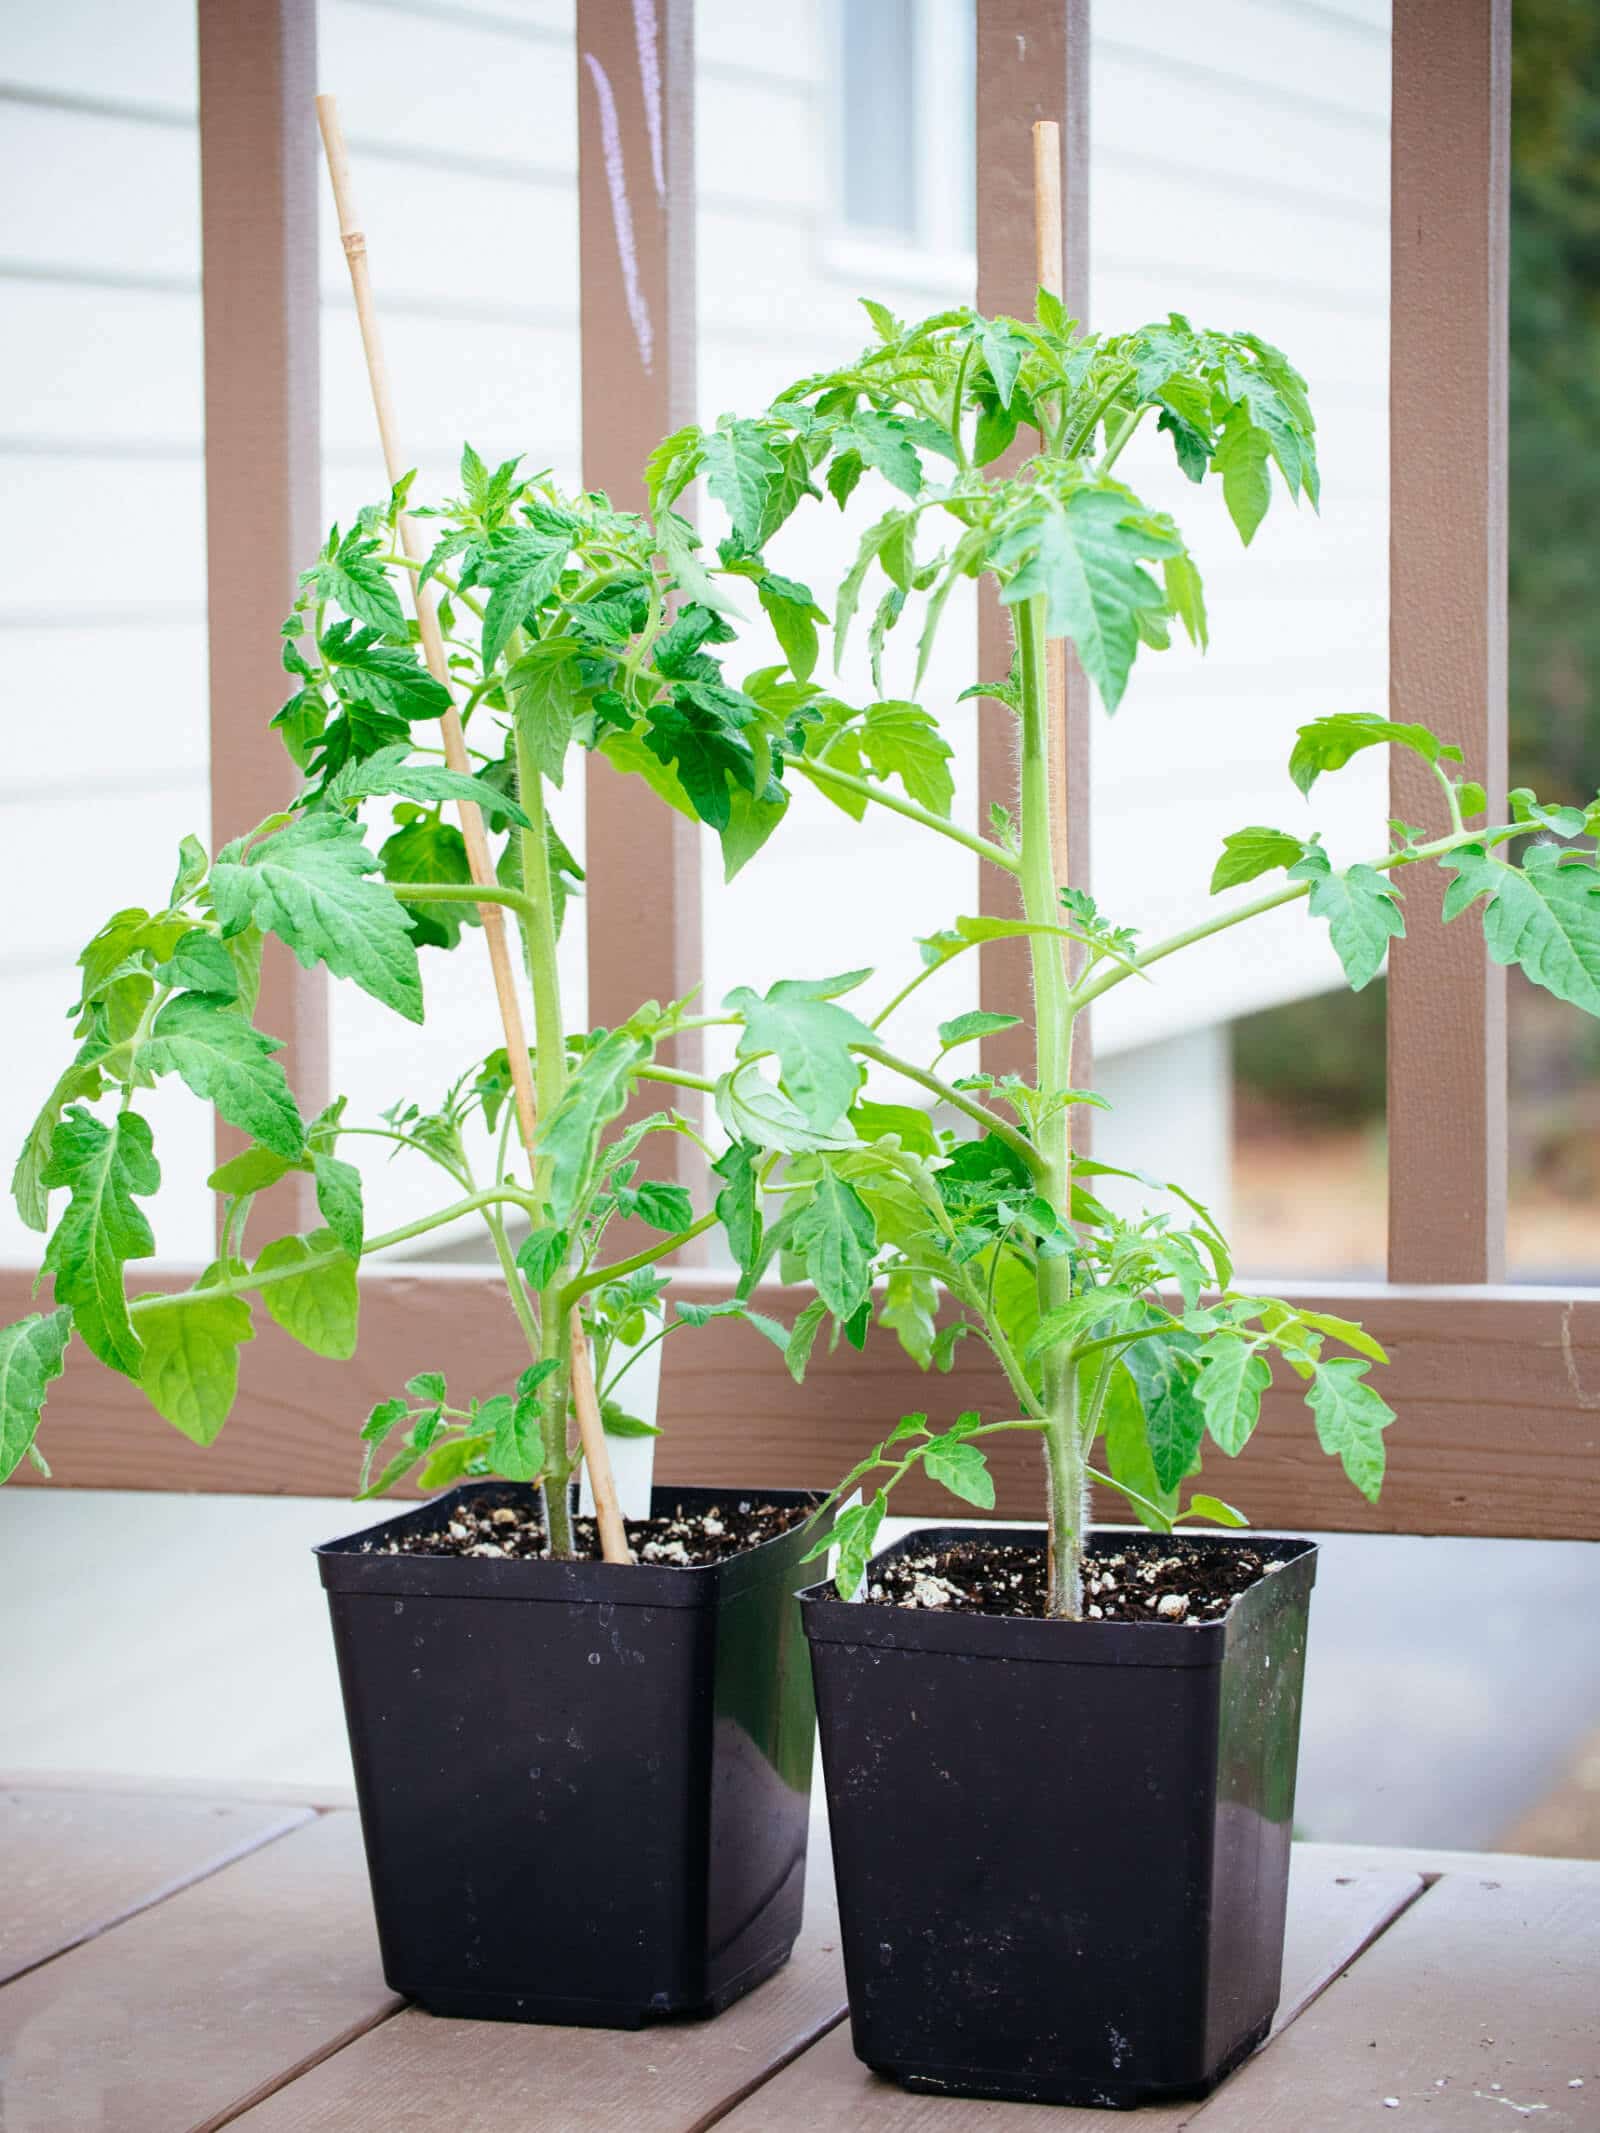 Tomato growing tips for the home gardener